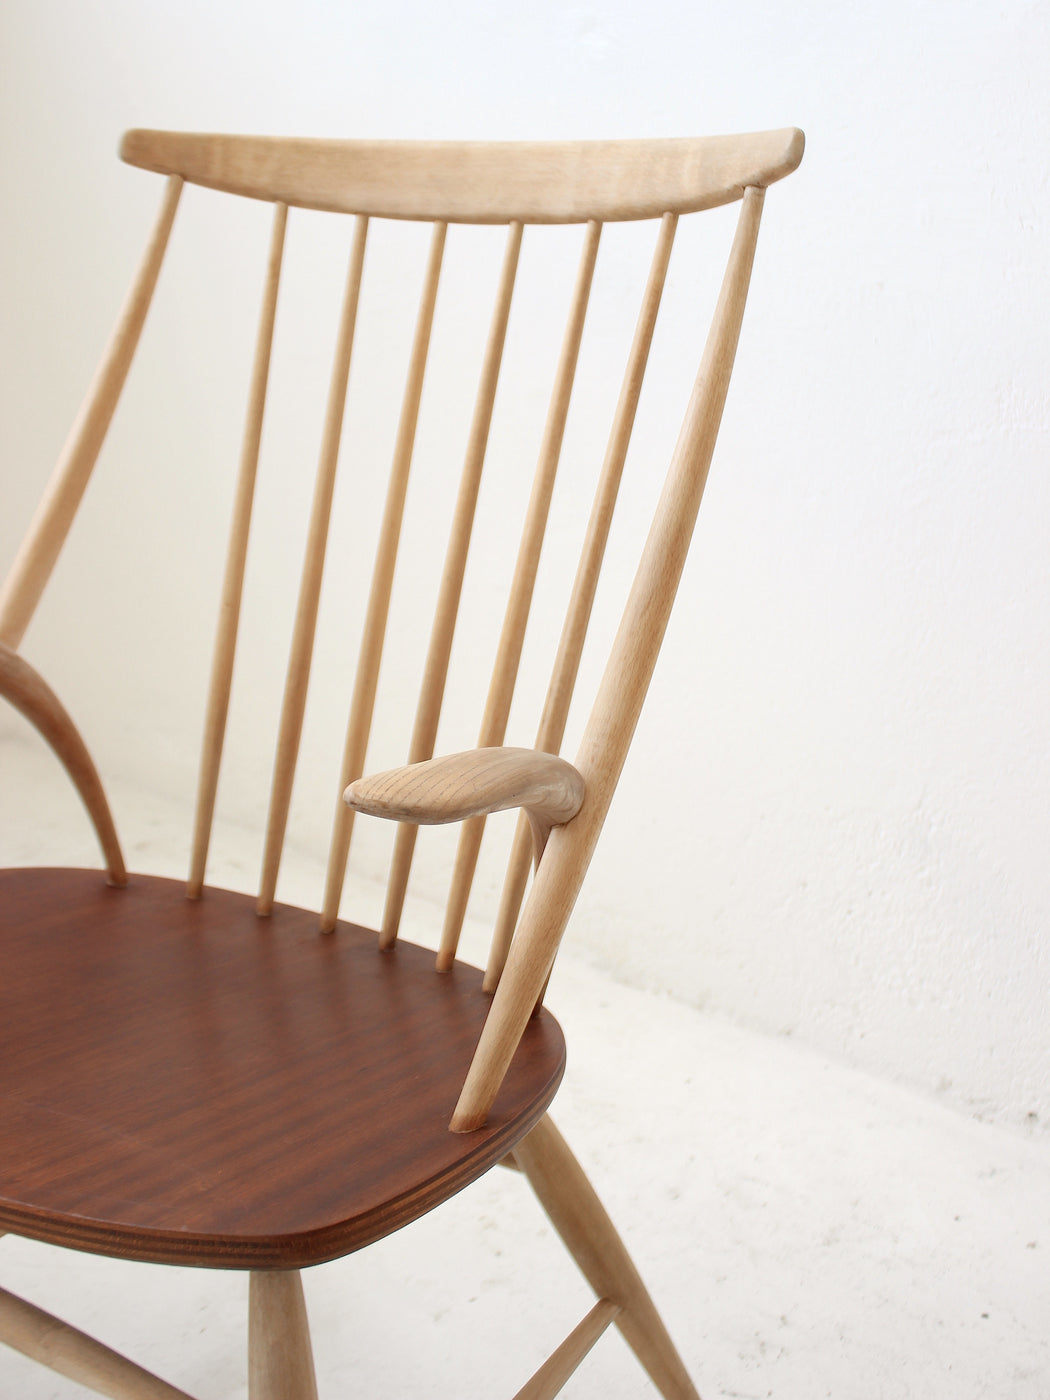 Illum Wikkelsø 'Spindle-Back' Chairs